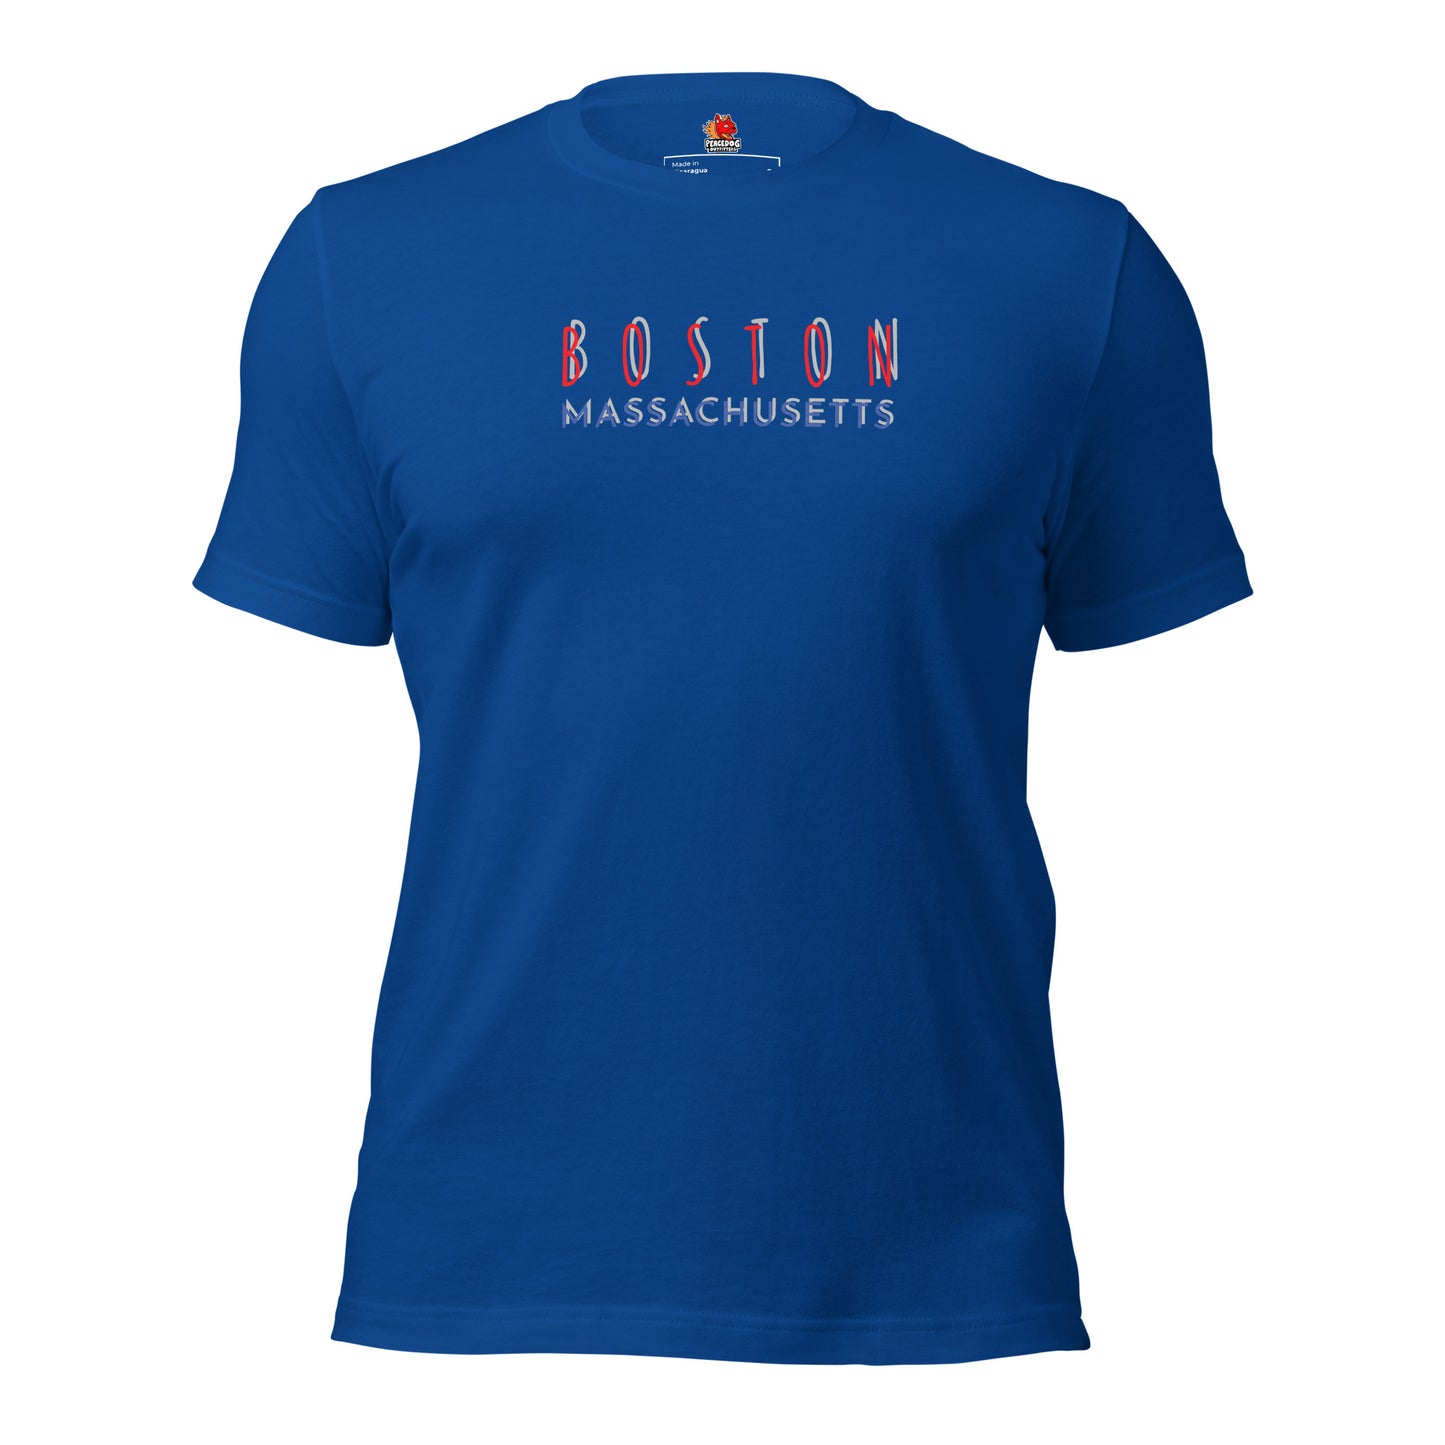 Boston, Massachusetts Typography Front Print T-shirt